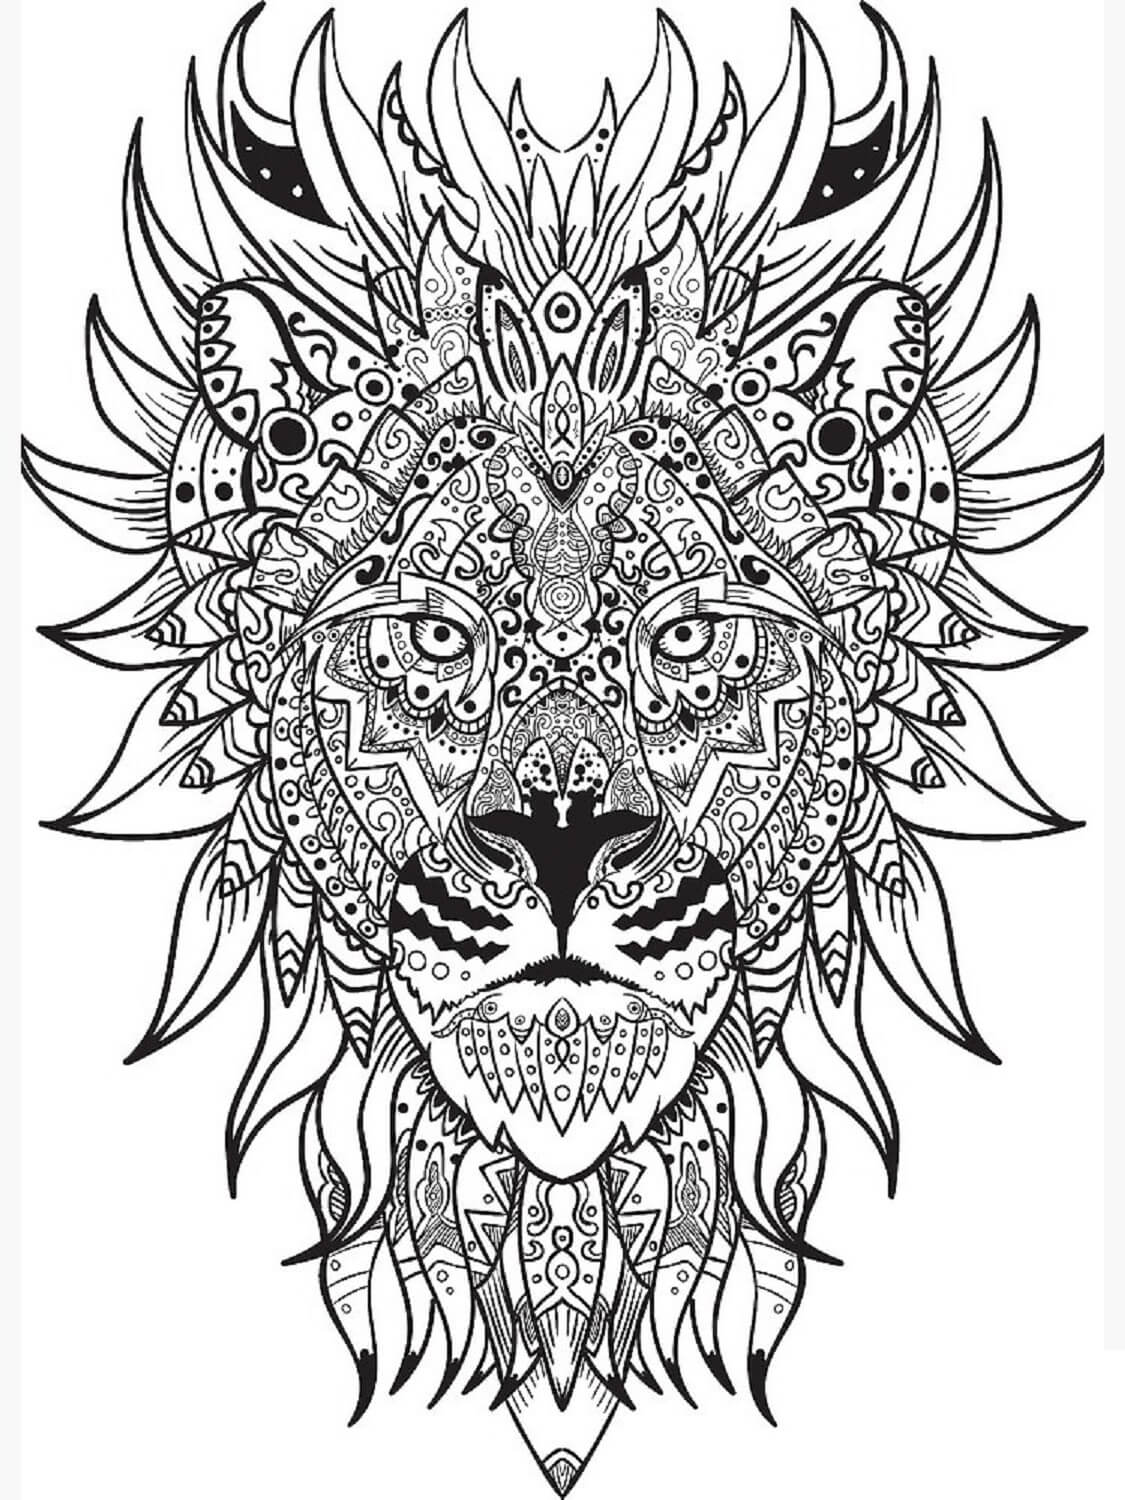 Mandala Lion Coloring Page - Sheet 11 Mandalas